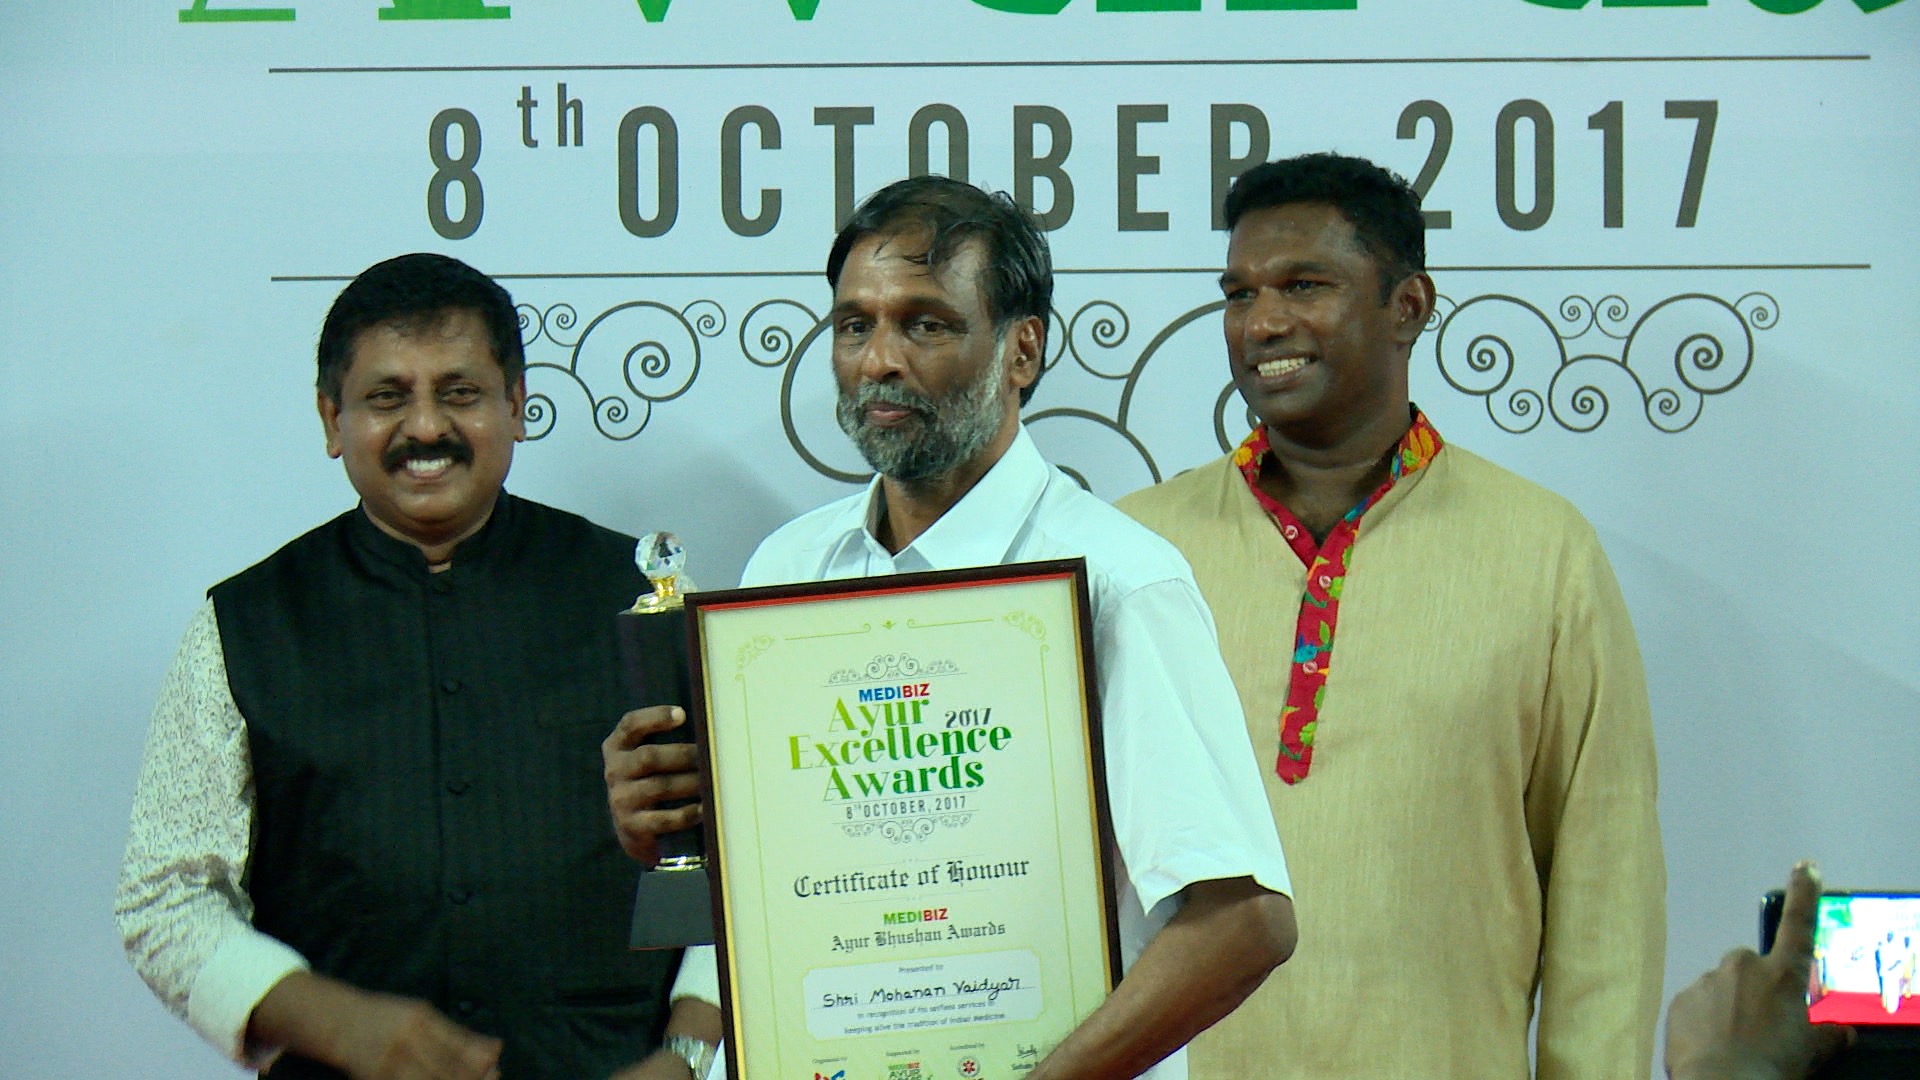 Medibiz Ayur Excellence Award - Ayur Bhushan - Mohanan Vaidyar